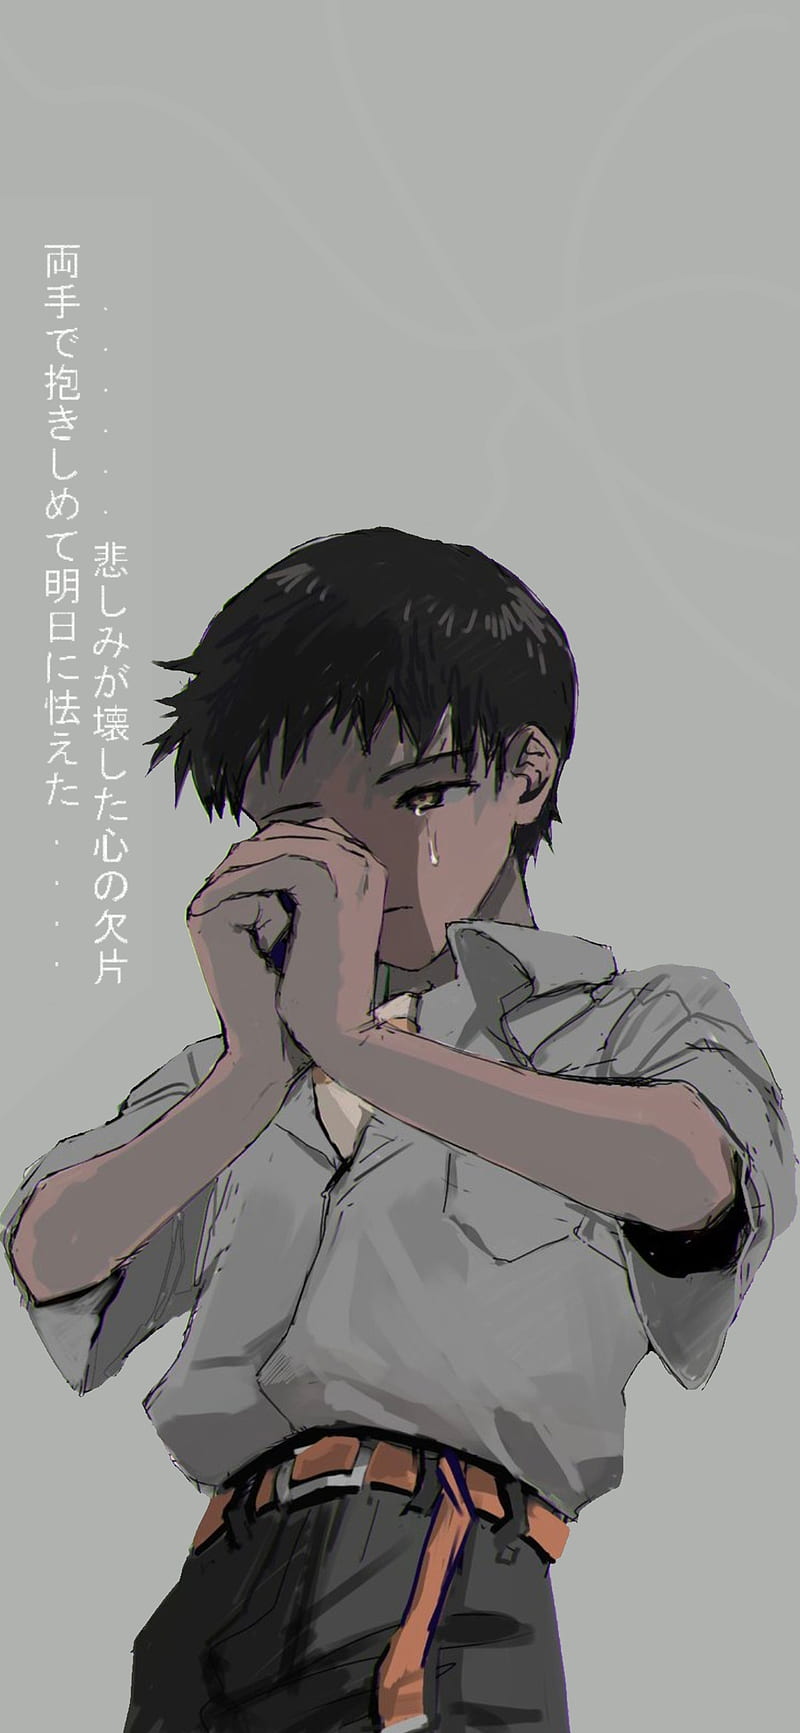 Shinji Ikari | Neon Genesis Evangelion | Anime Poster-demhanvico.com.vn